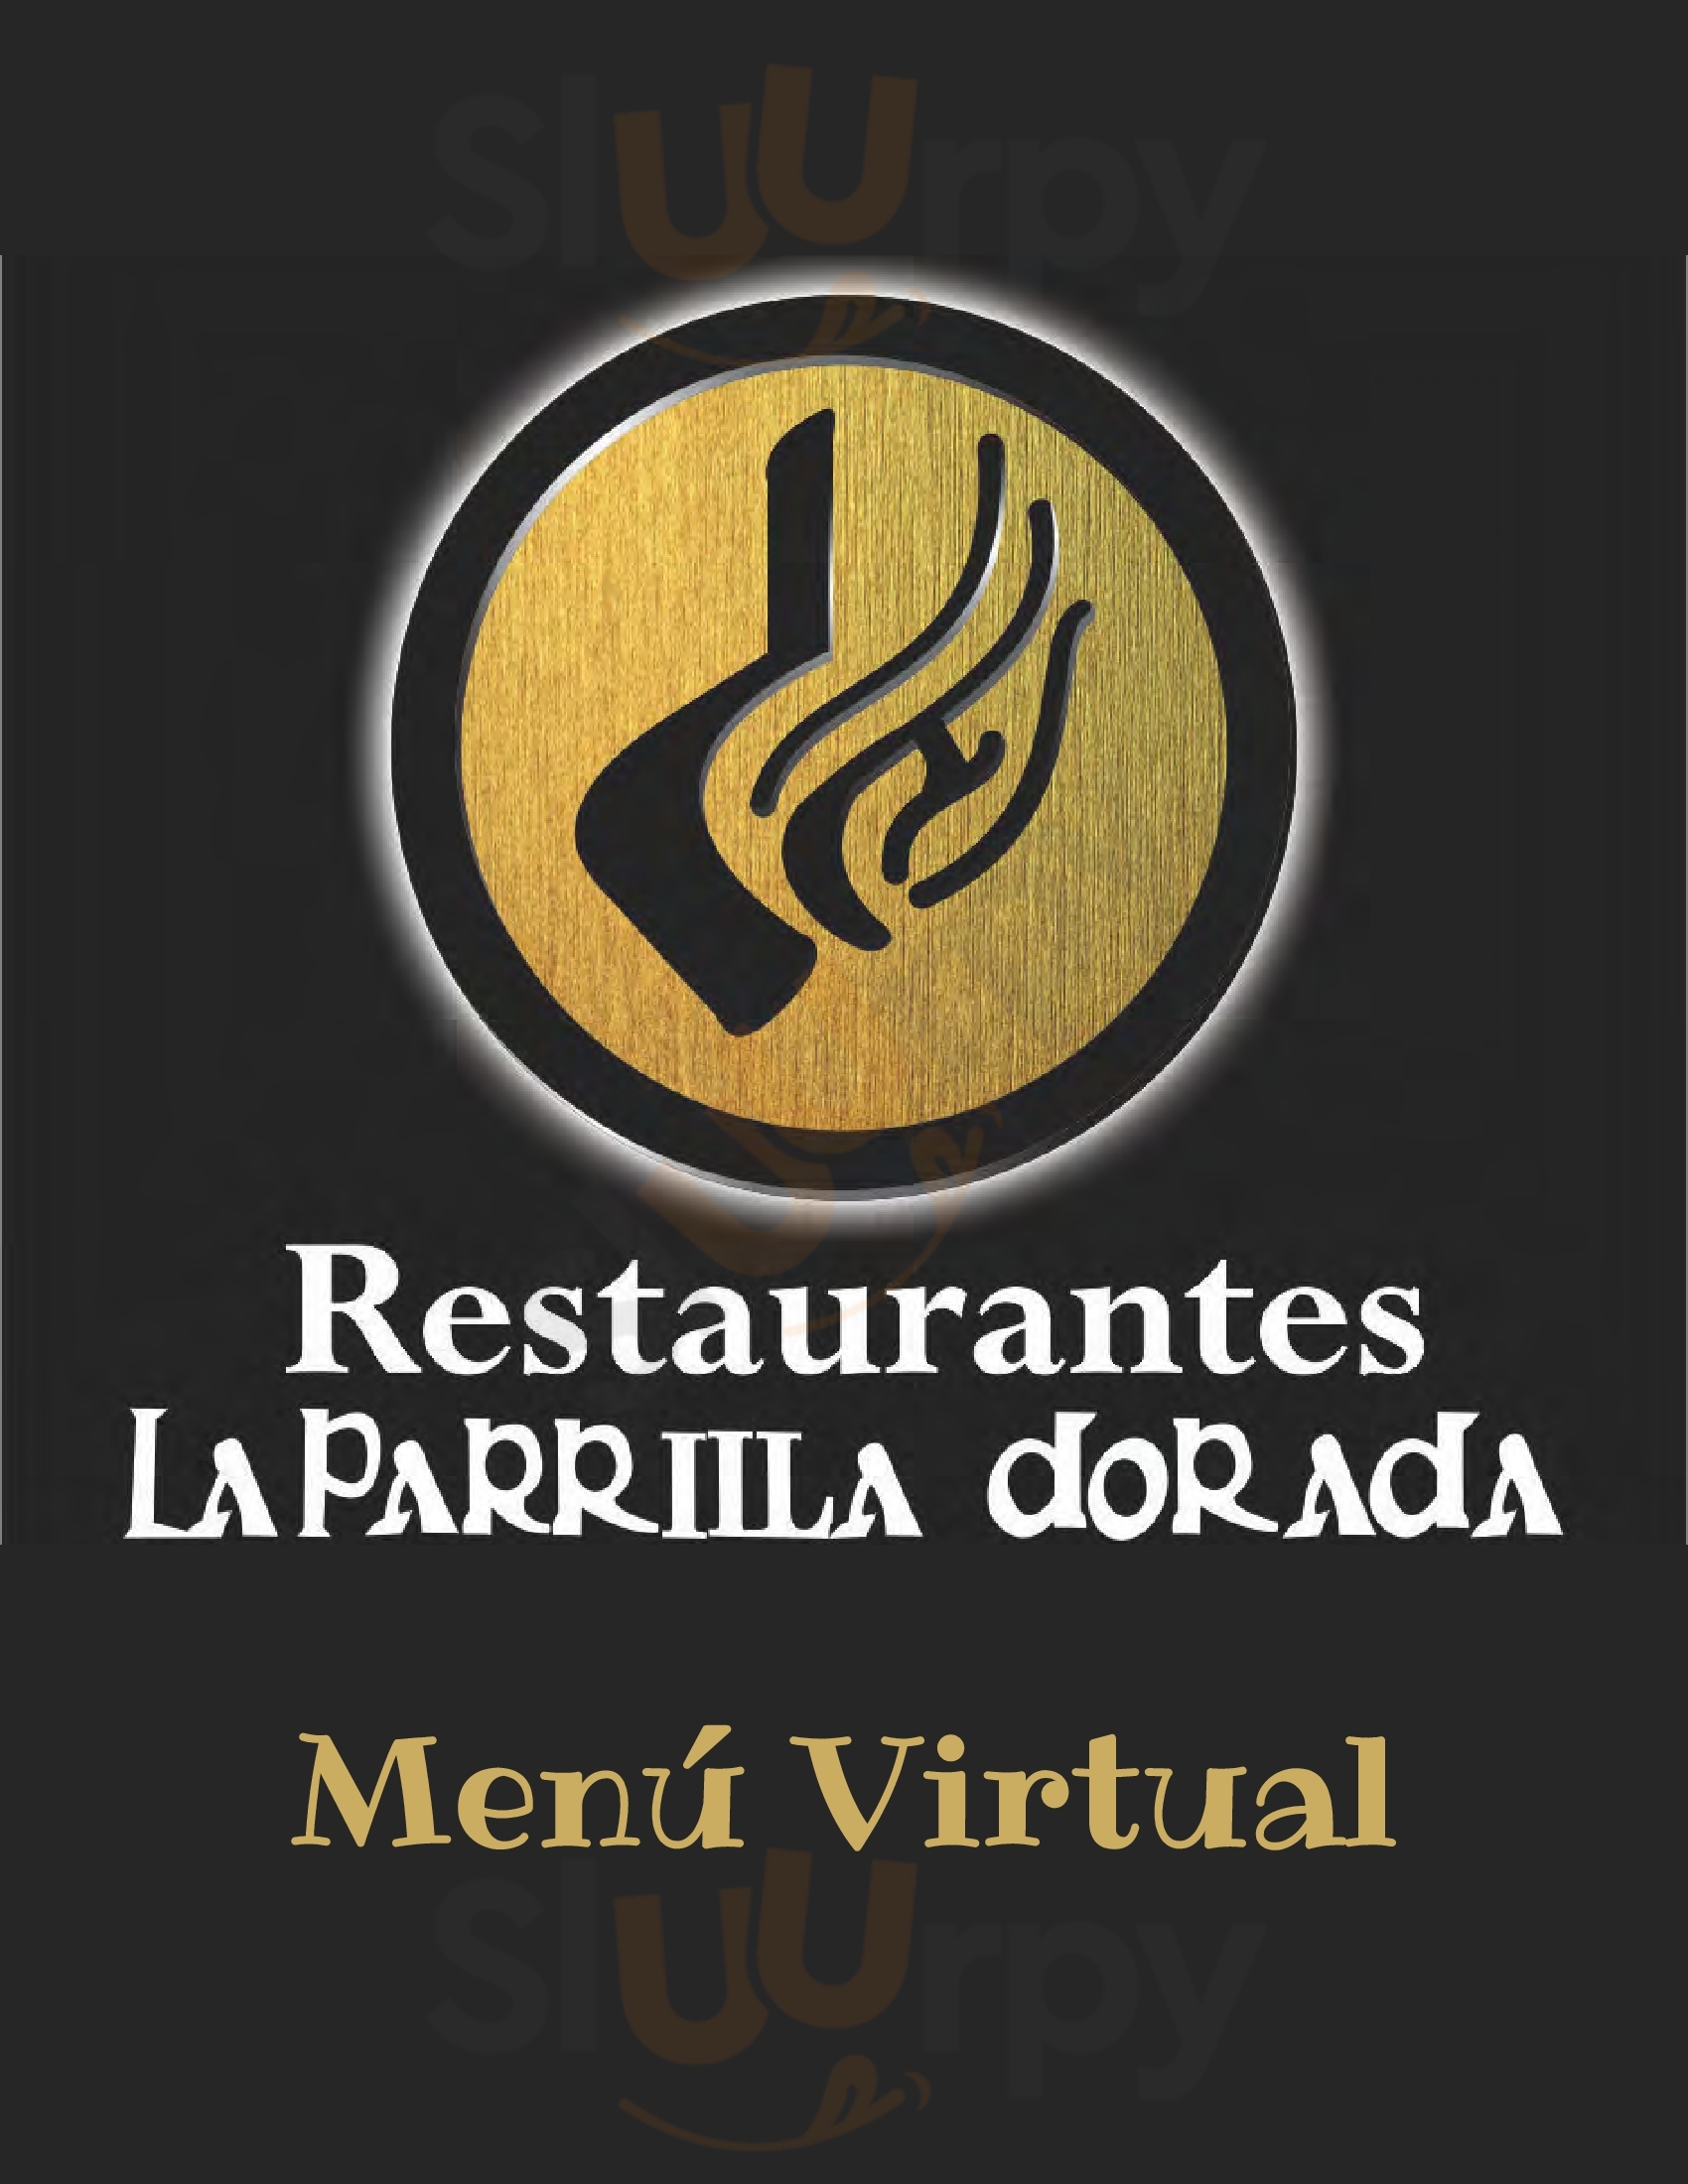 Restaurante La Parrilla Dorada Bogotá Menu - 1